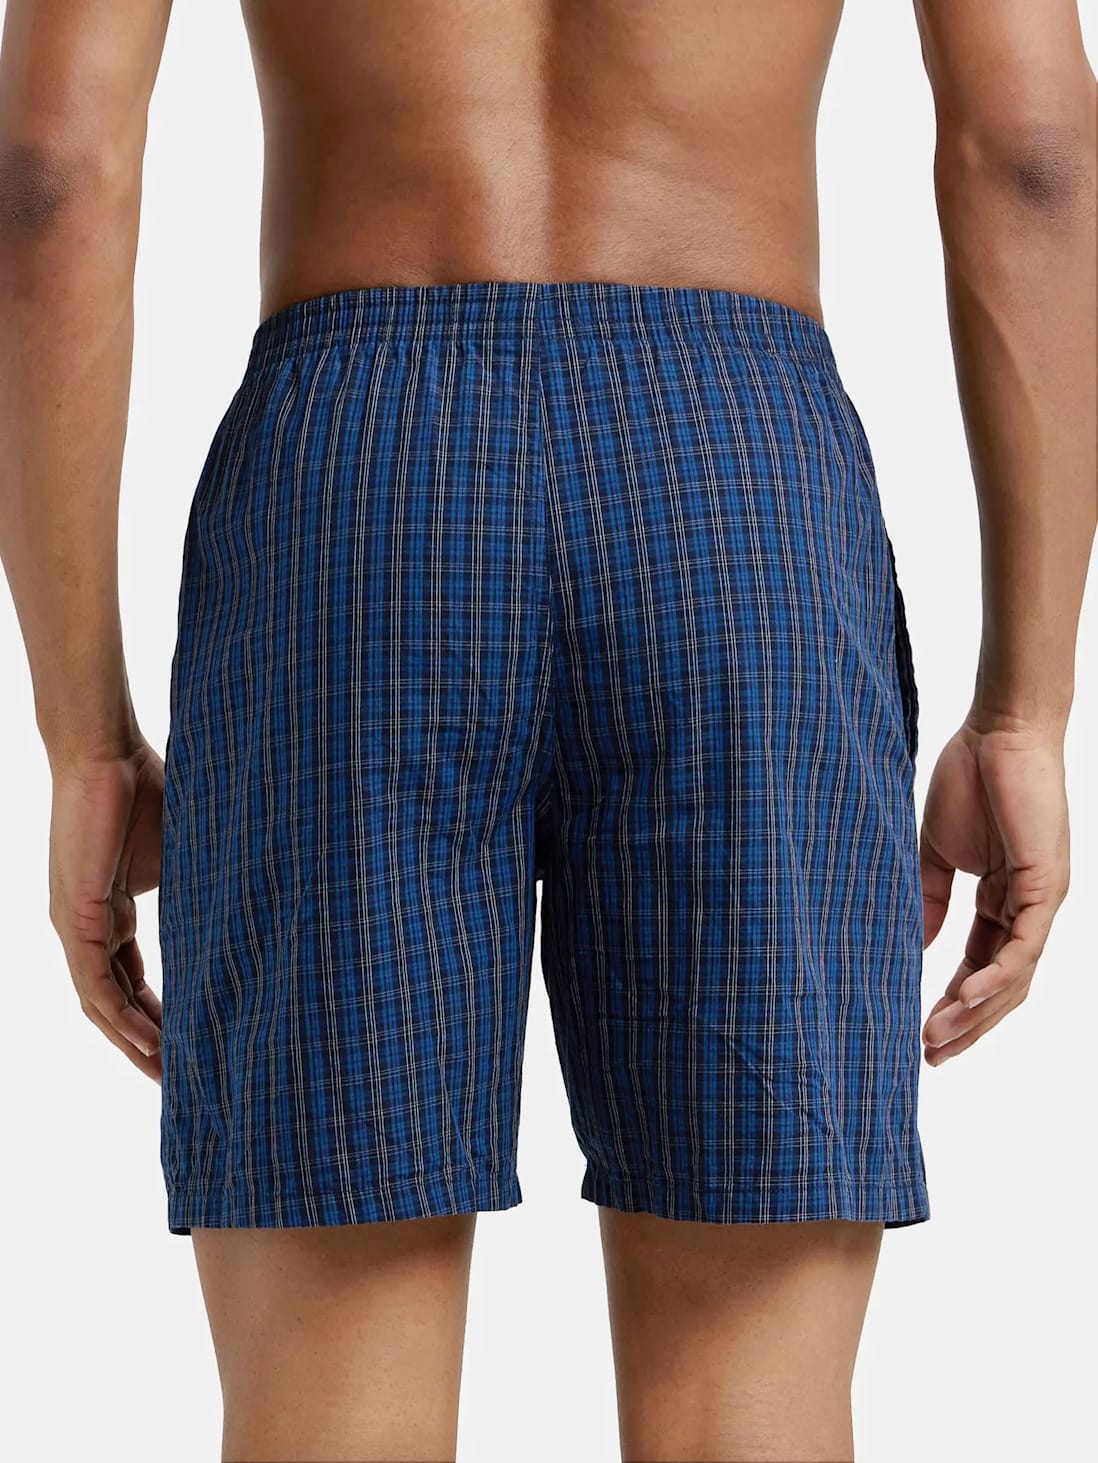 Buy Men's Super Combed Mercerized Cotton Woven Checkered Boxer Shorts ...